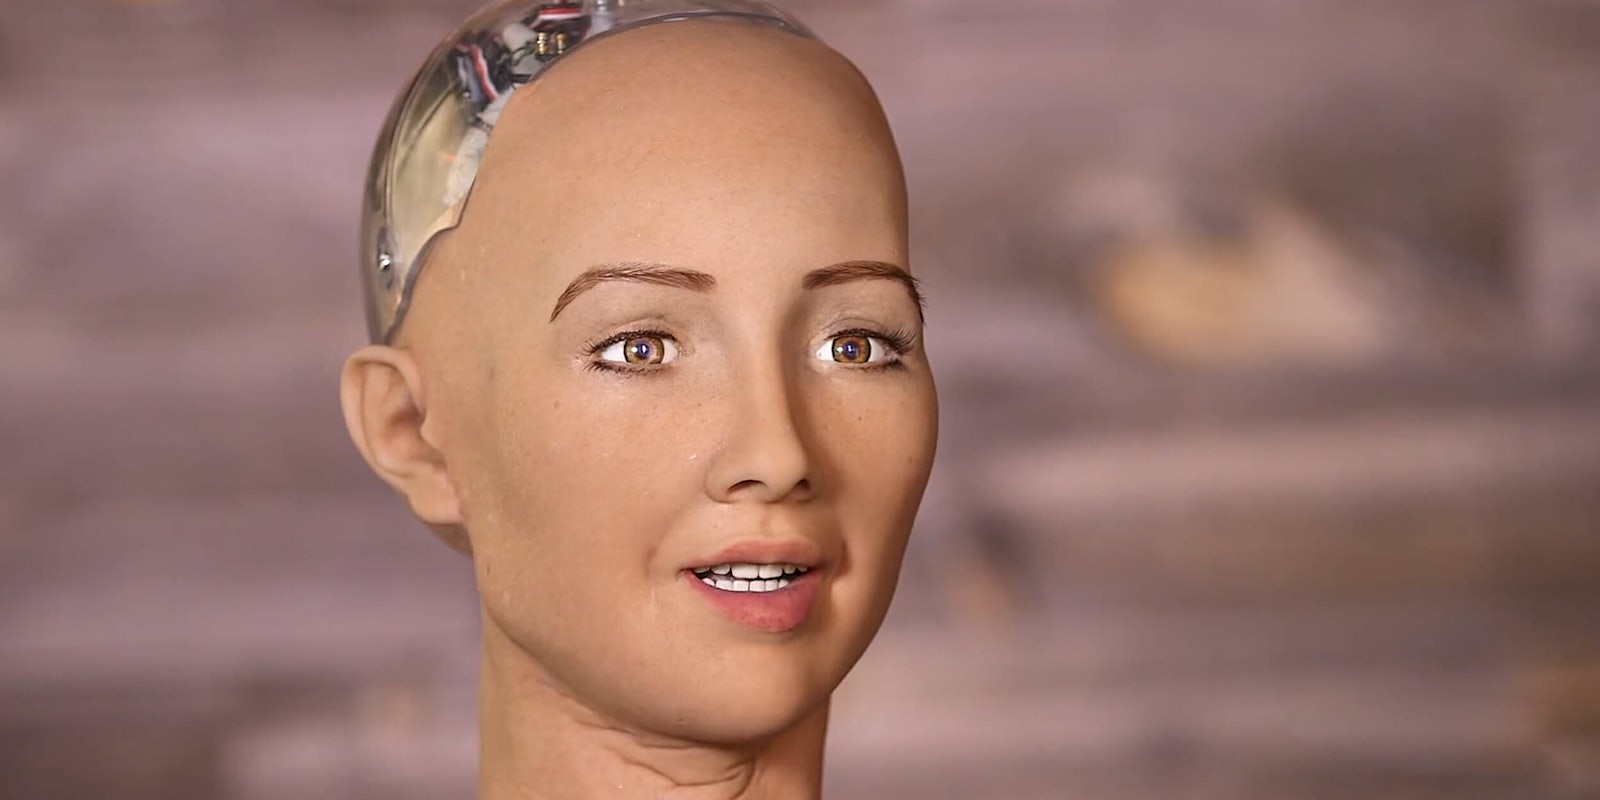 Sophia the humanlike robot